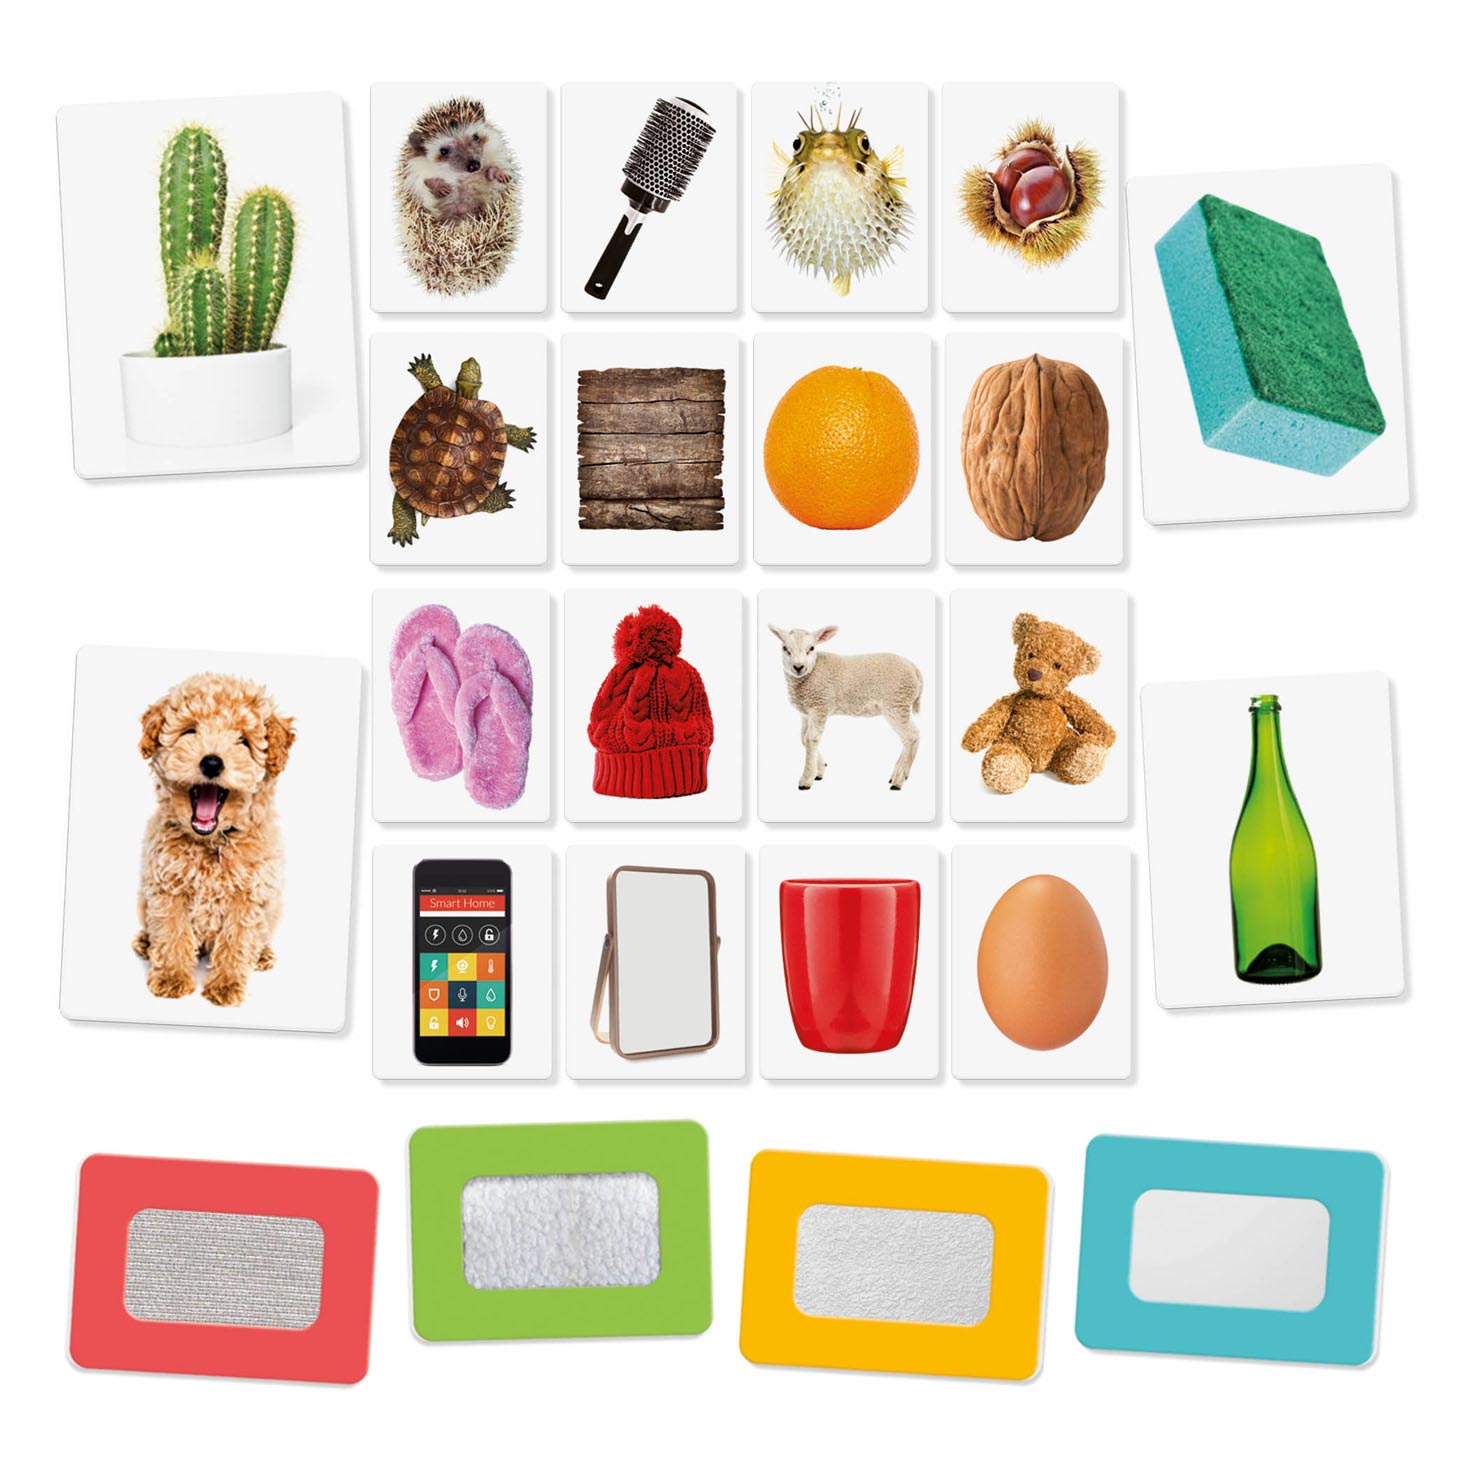 Headu Flashcards Tactile Montessori Mémo Jeu